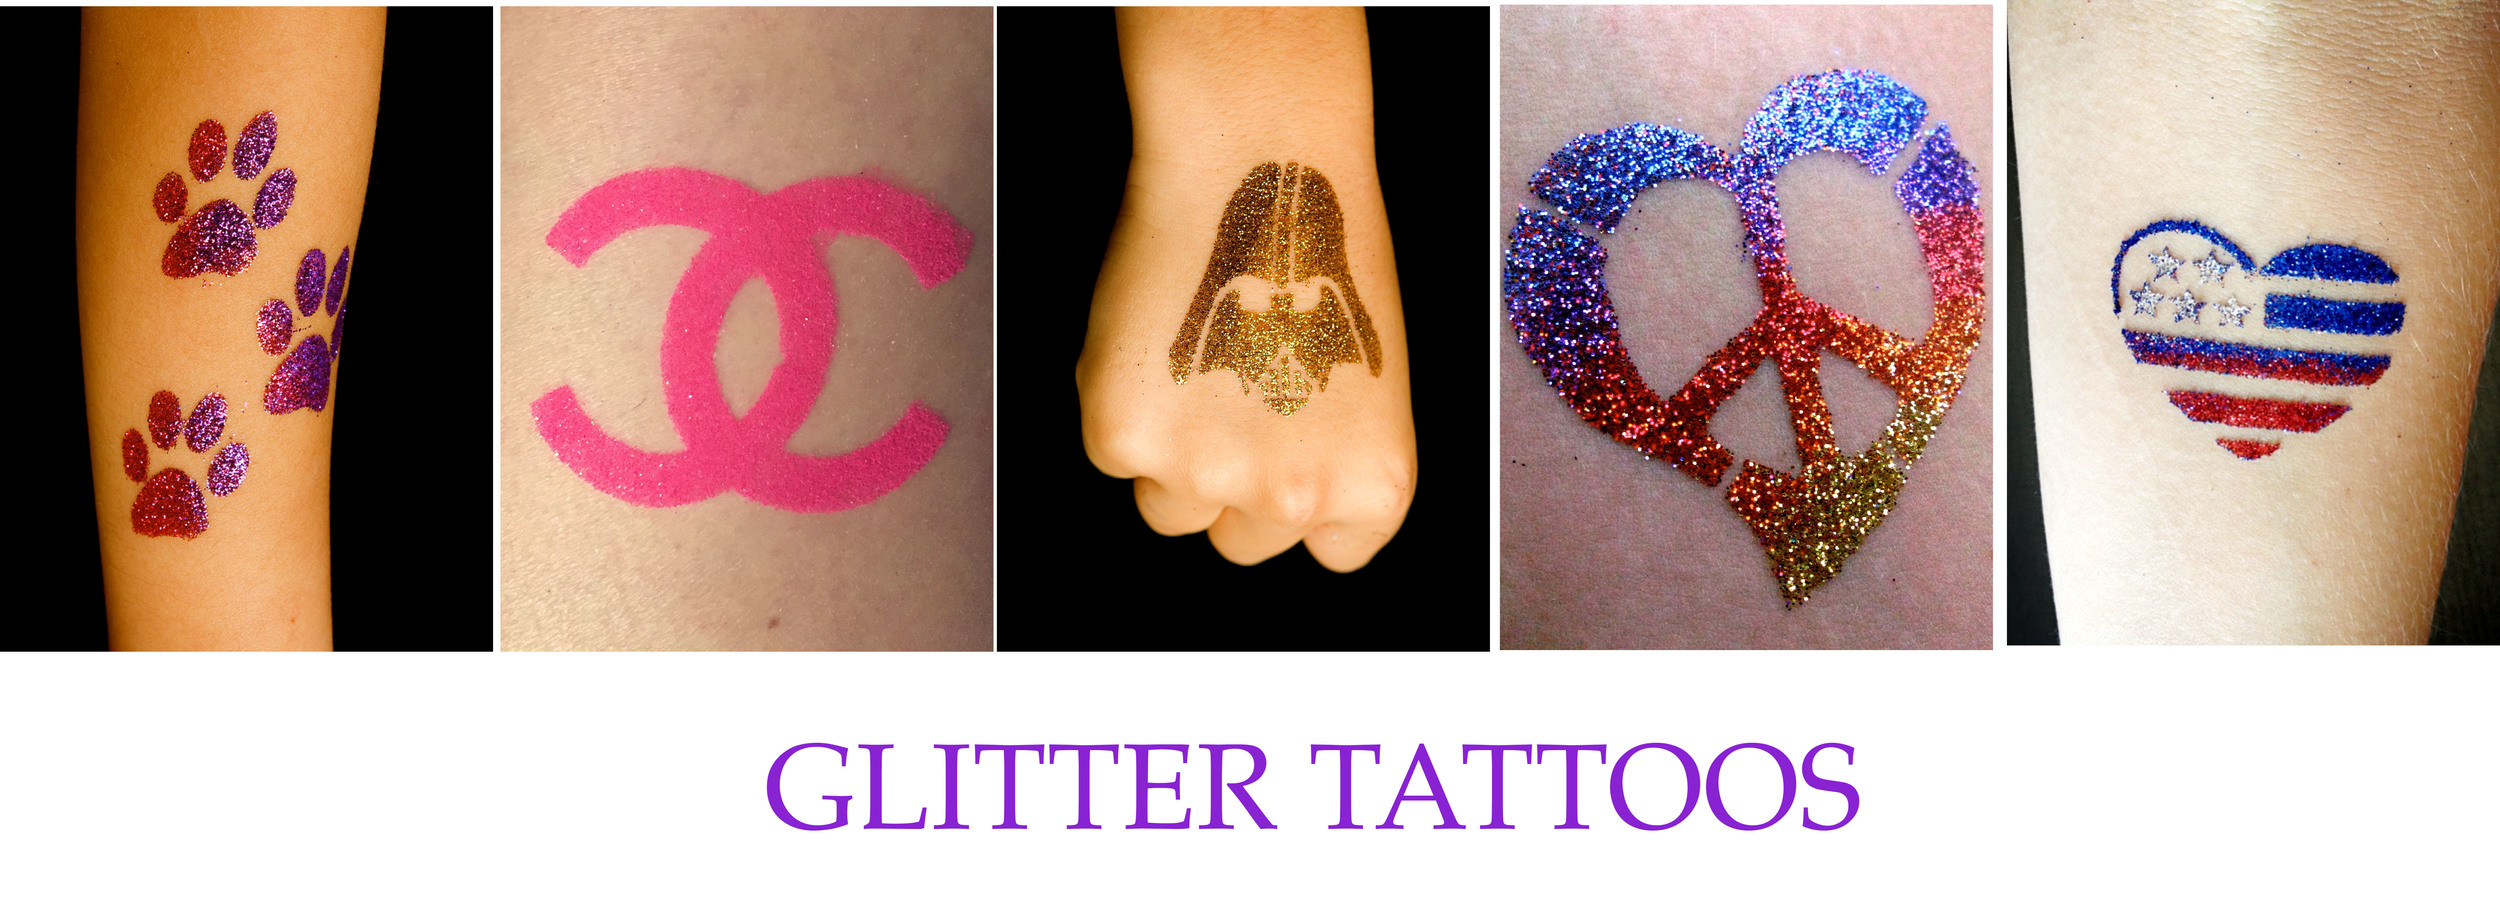 Glitter Tattoos We Adorn You.jpg